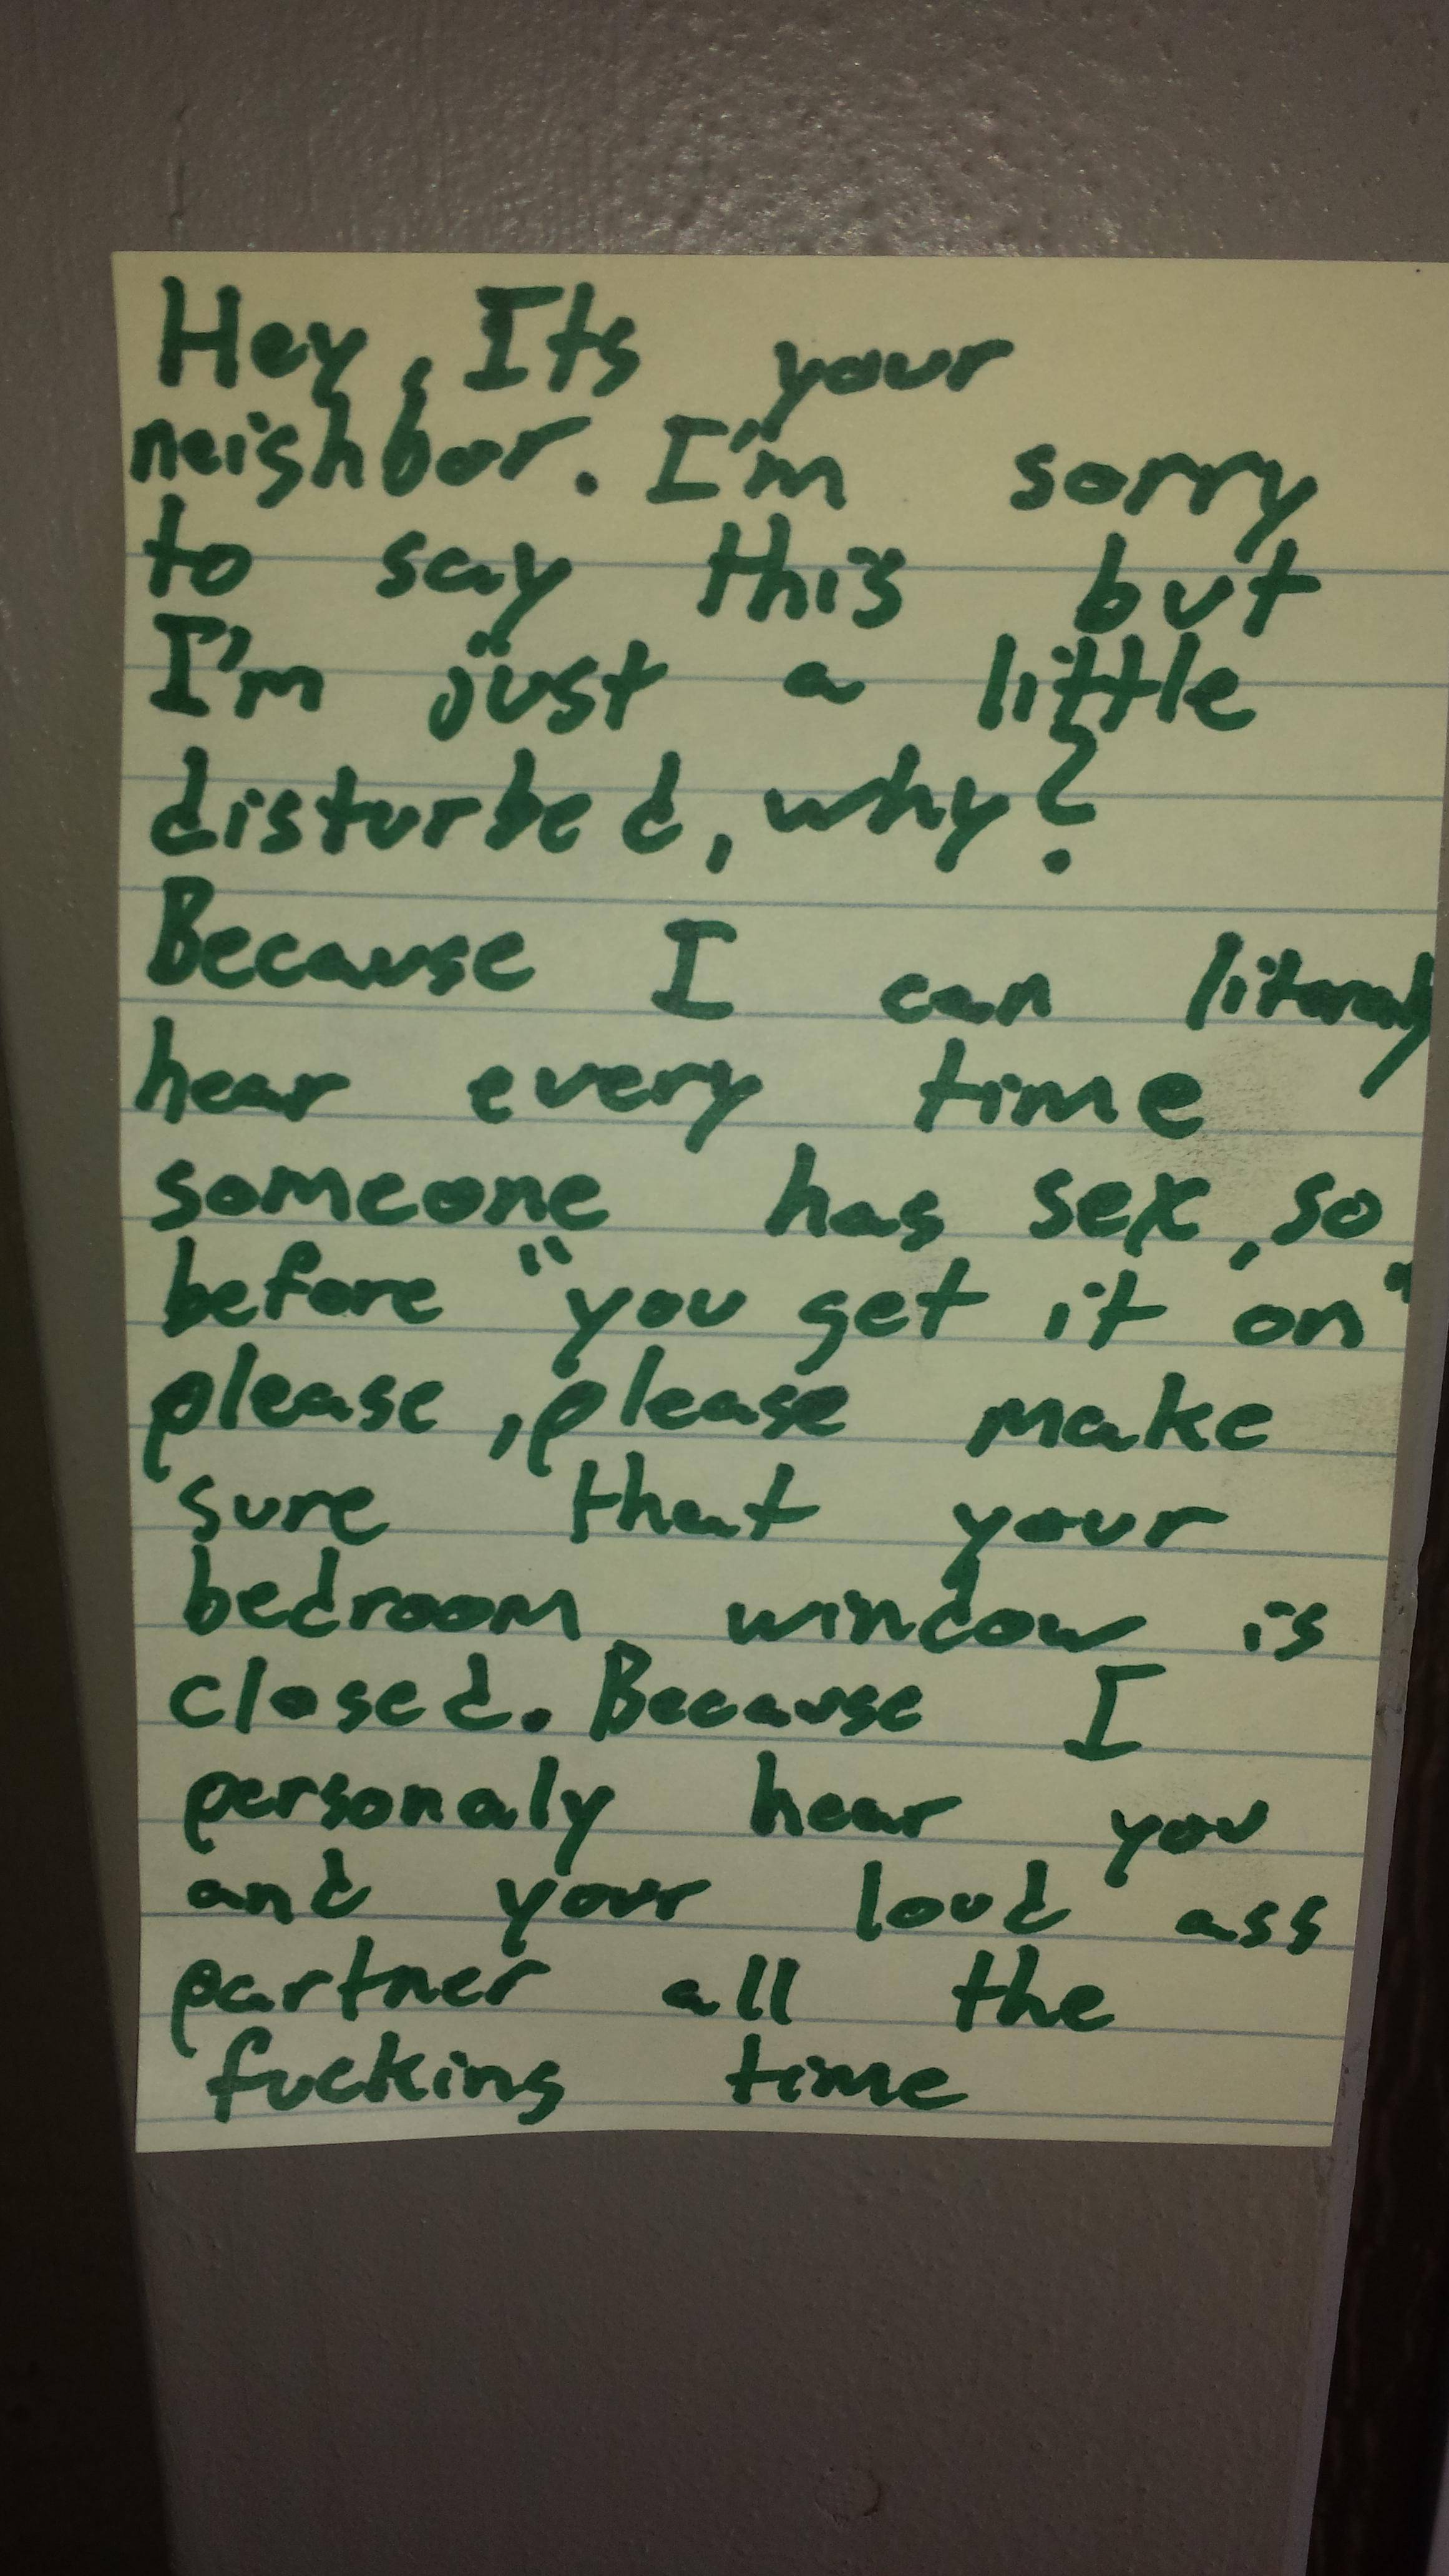 Notes Asking Neighbors To Stop Having Loud Sex Neighbors